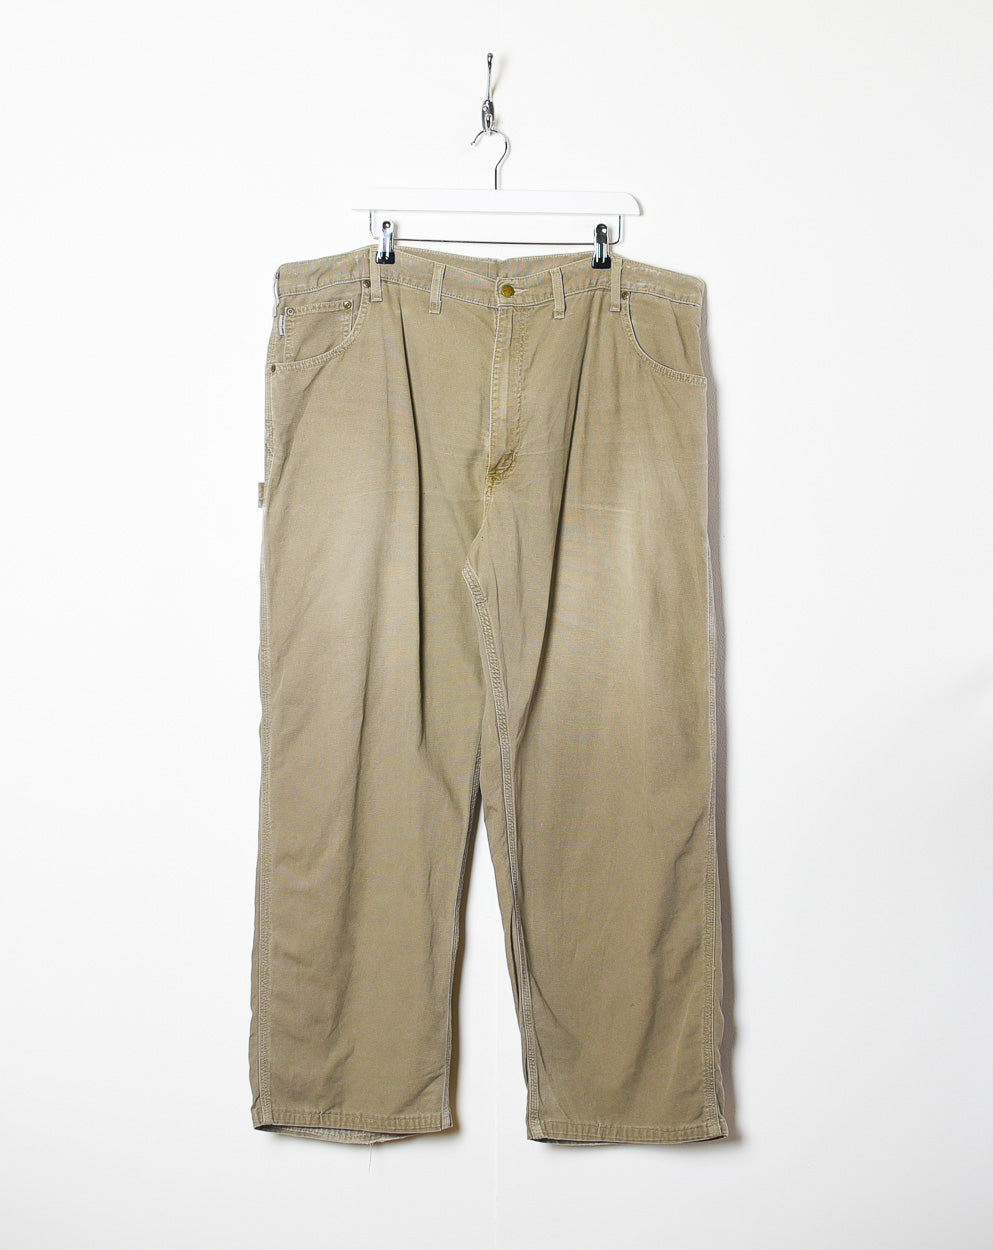 Neutral Carhartt Carpenter Jeans - W49 L30